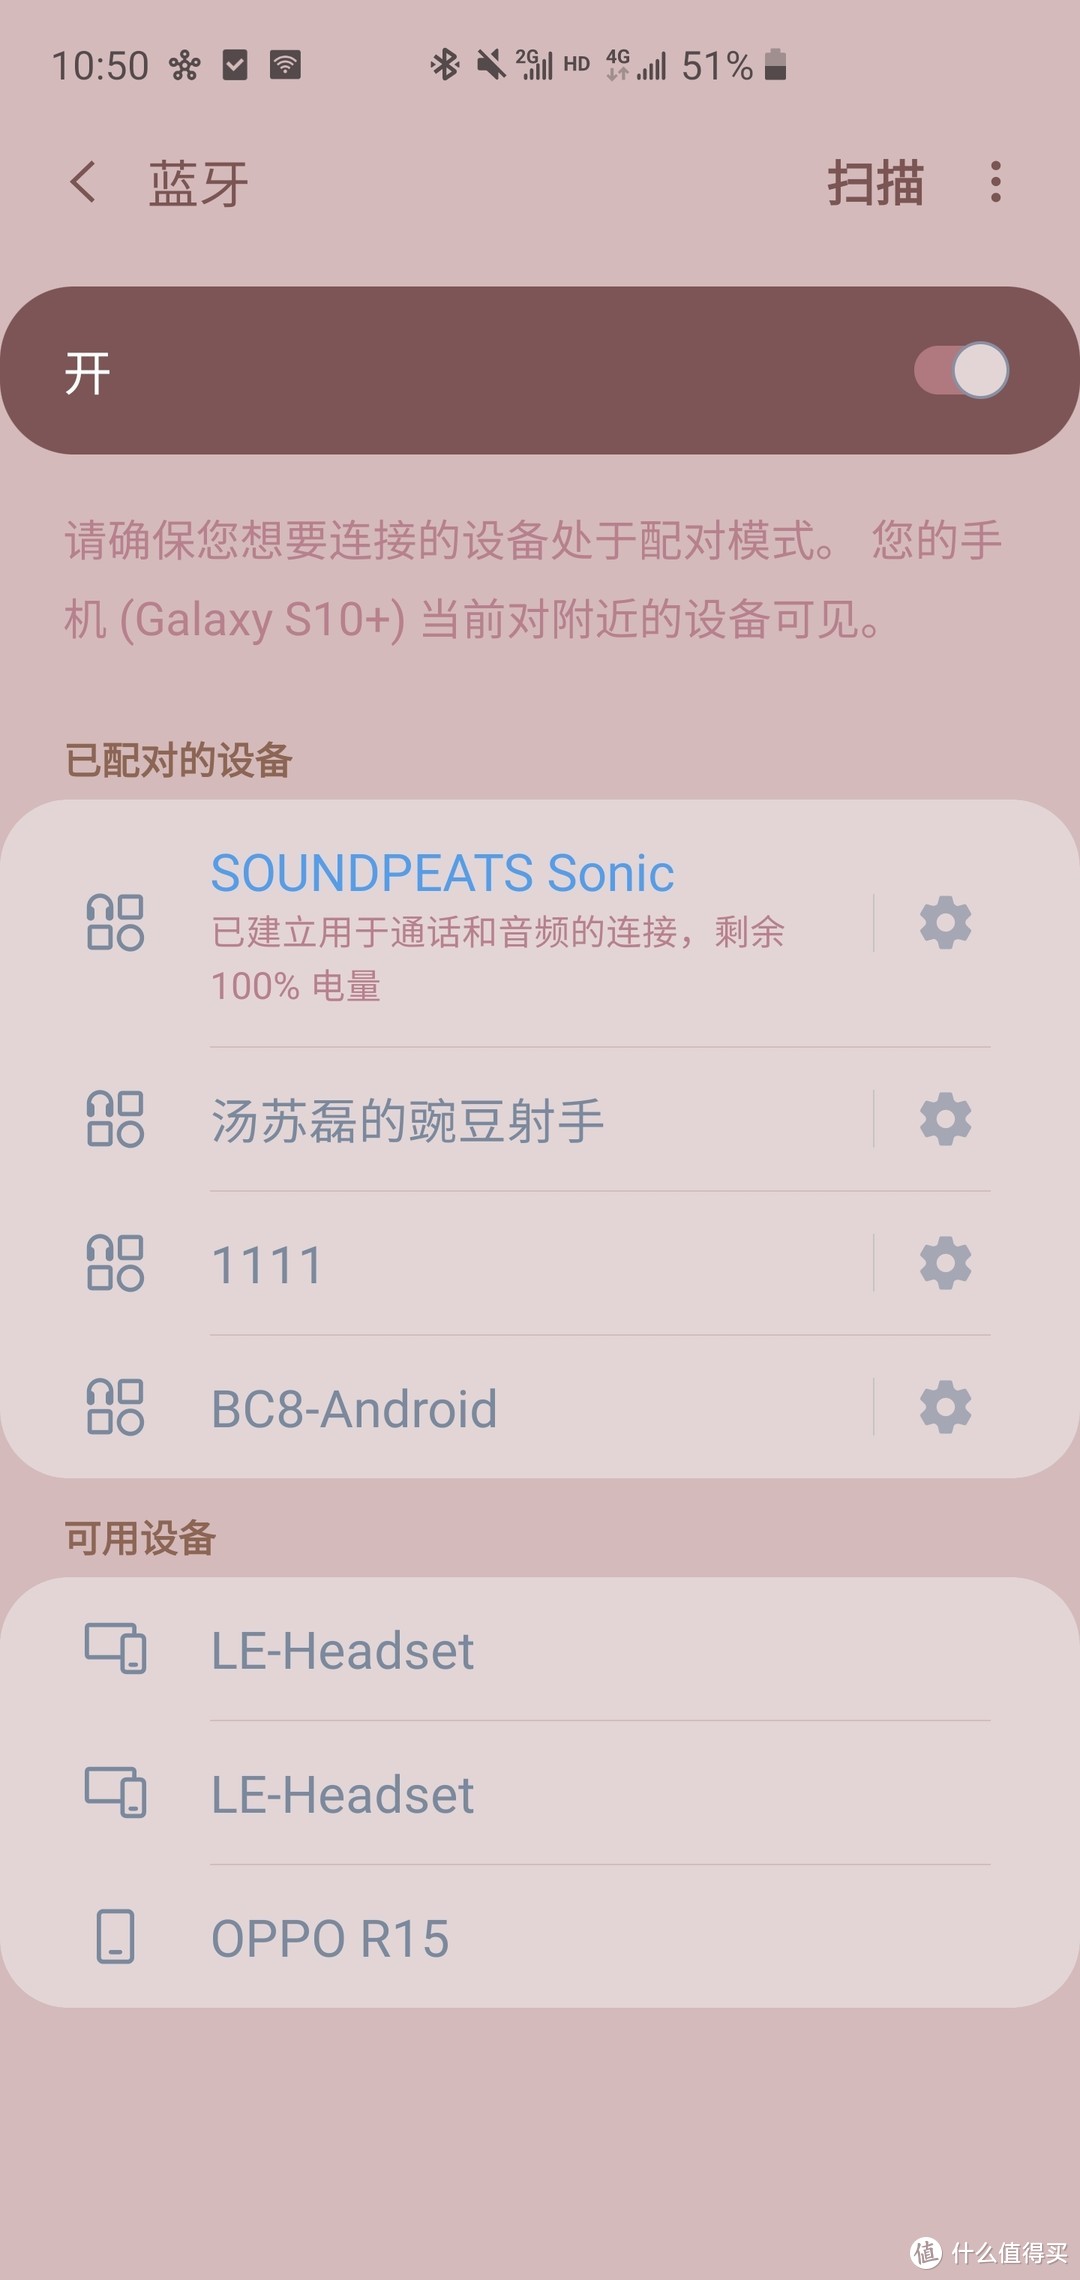 soundpeats sonic/泥炭 真无线蓝牙耳机测评